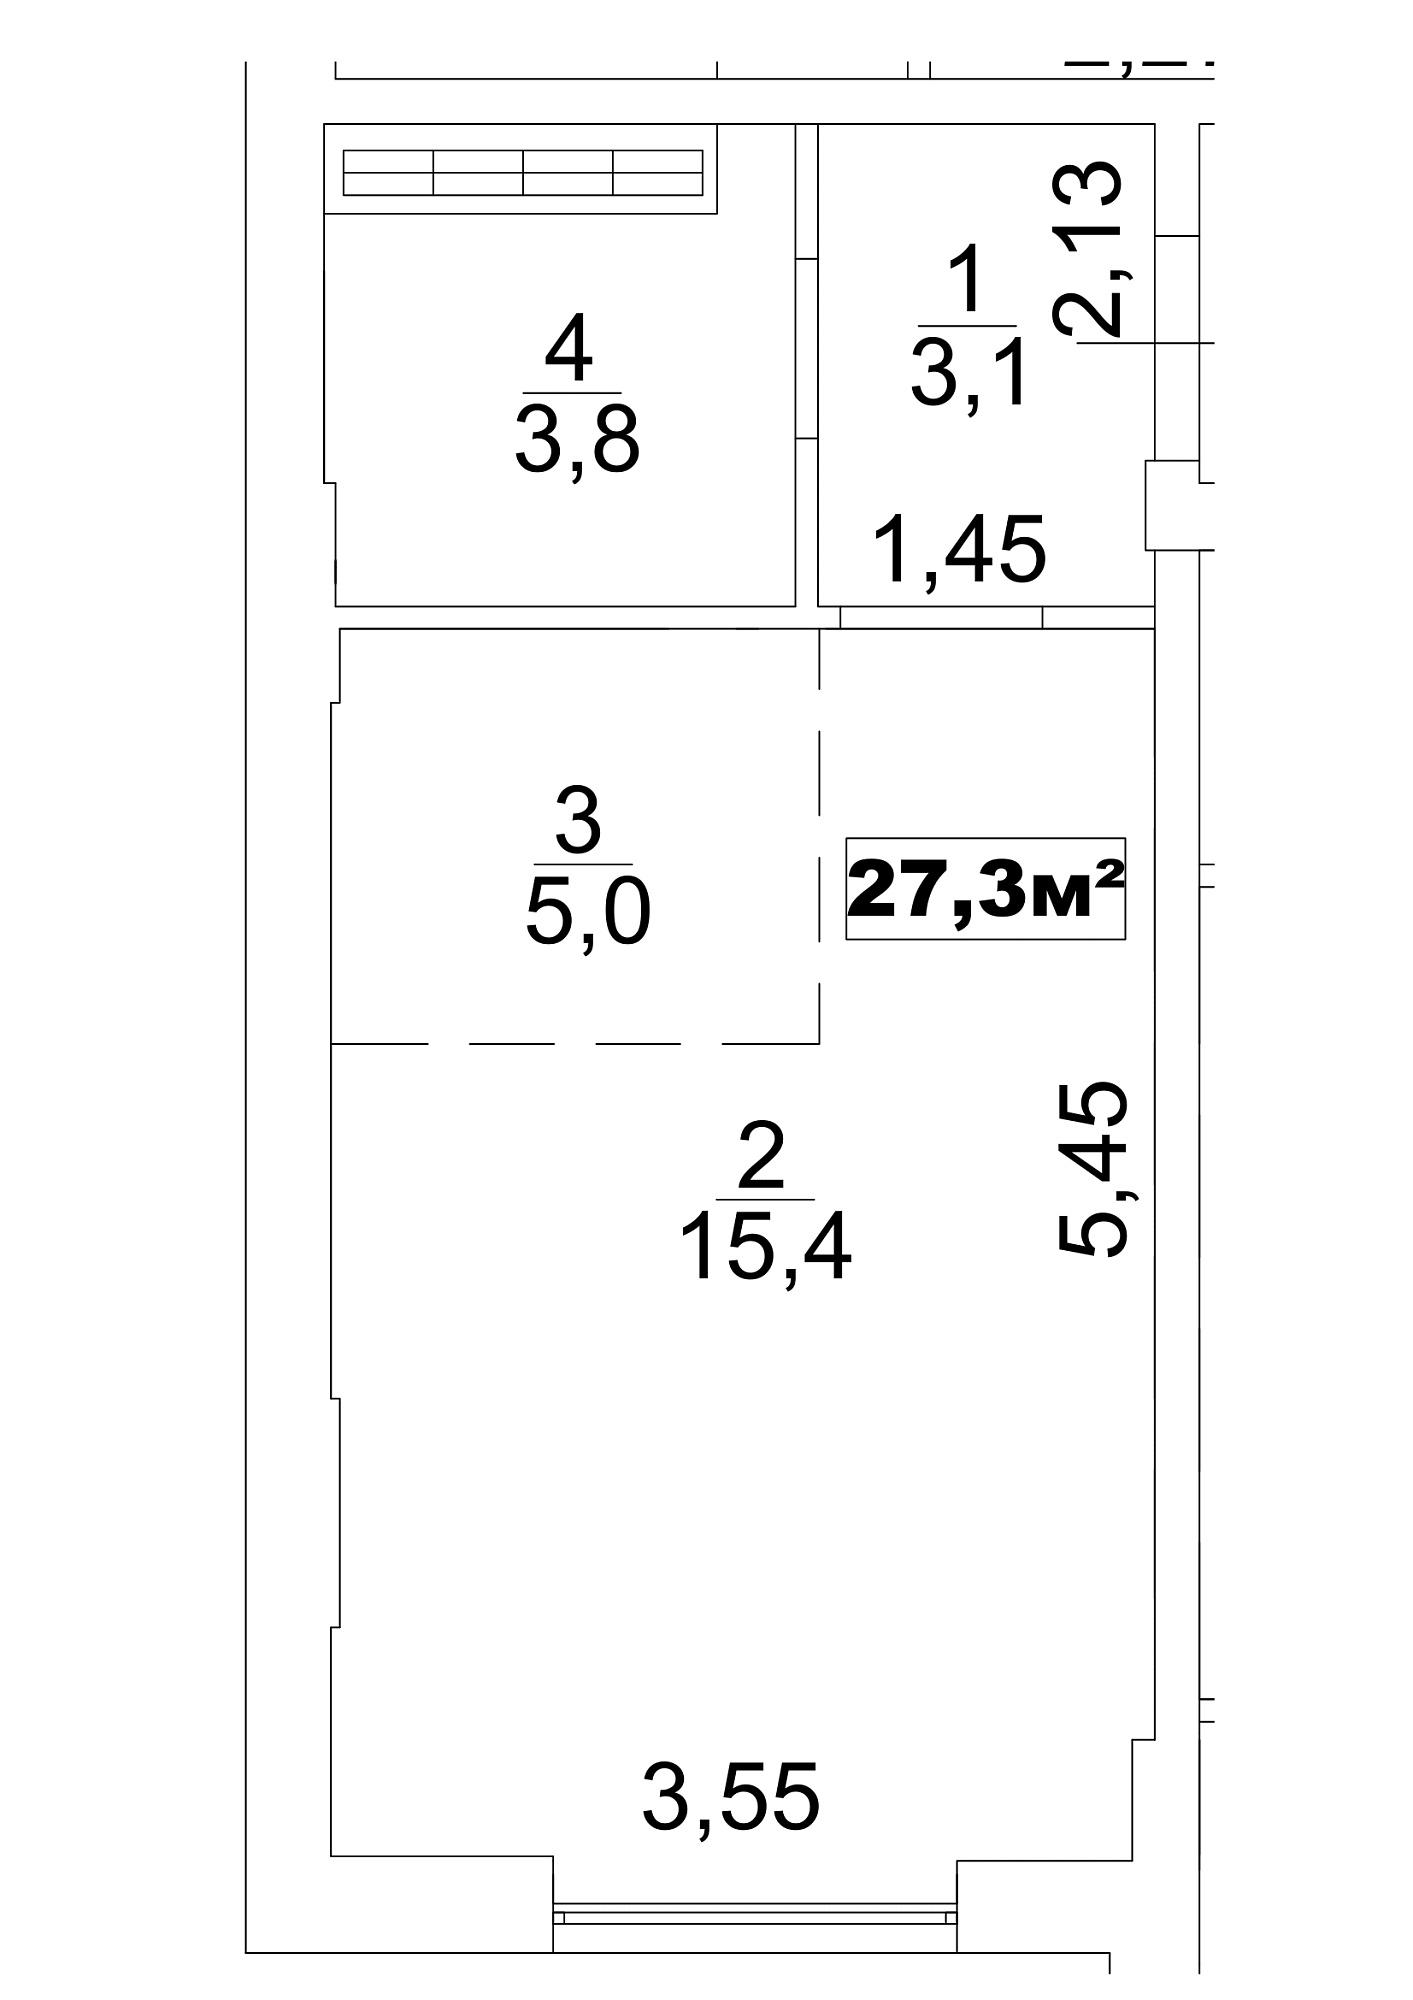 Planning Smart flats area 27.3m2, AB-13-10/0081а.